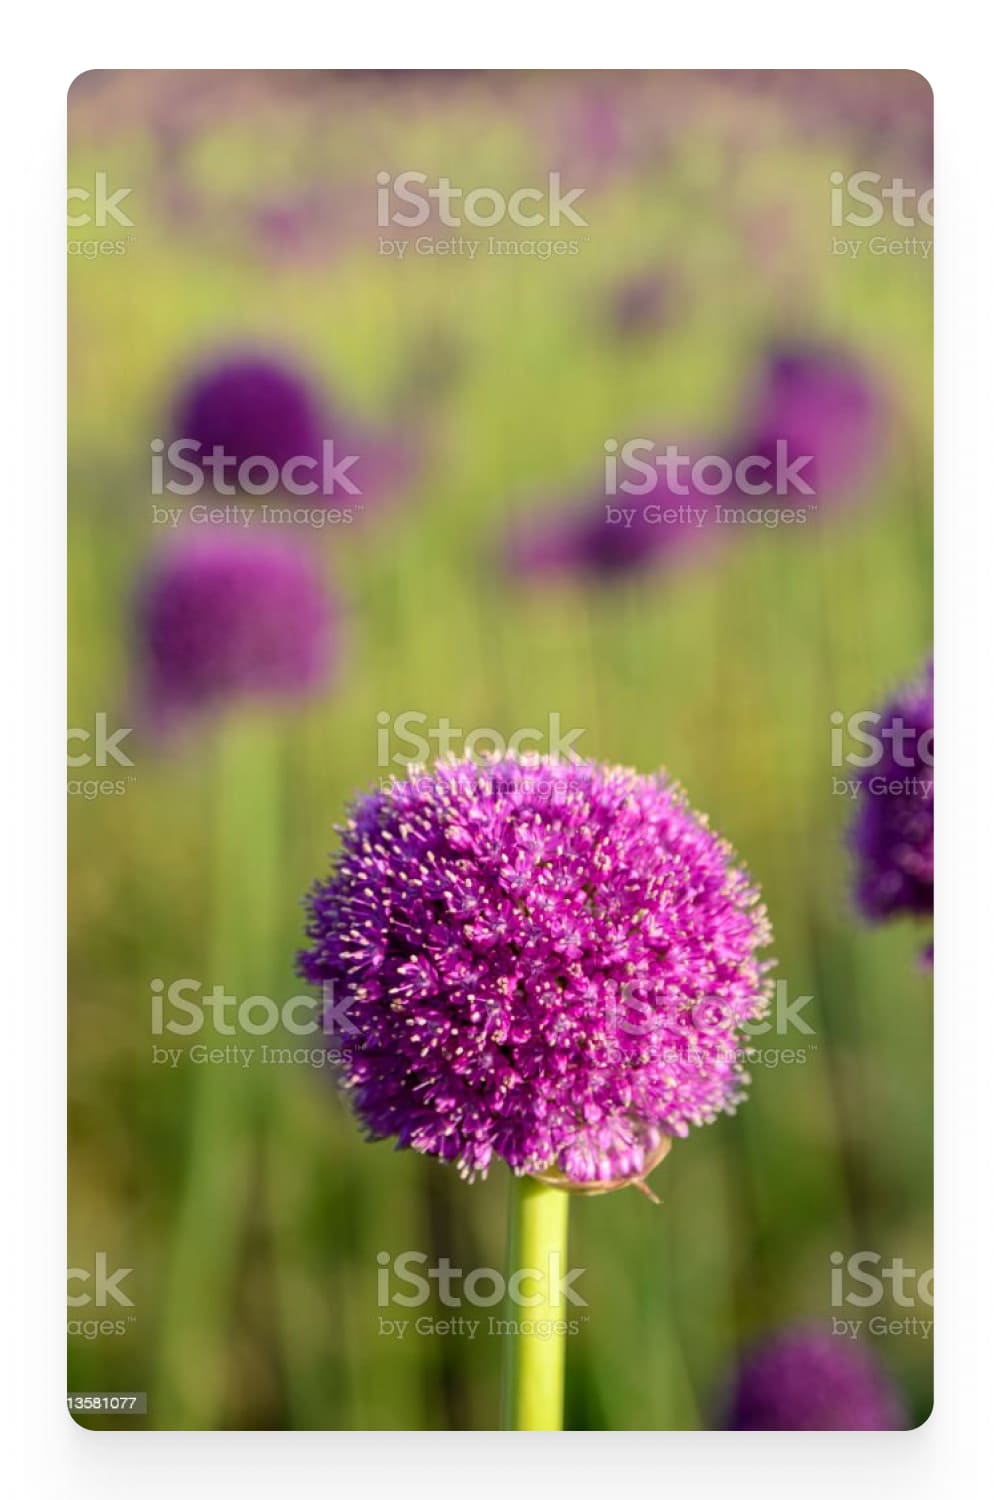 Flower with purple bud in the field.